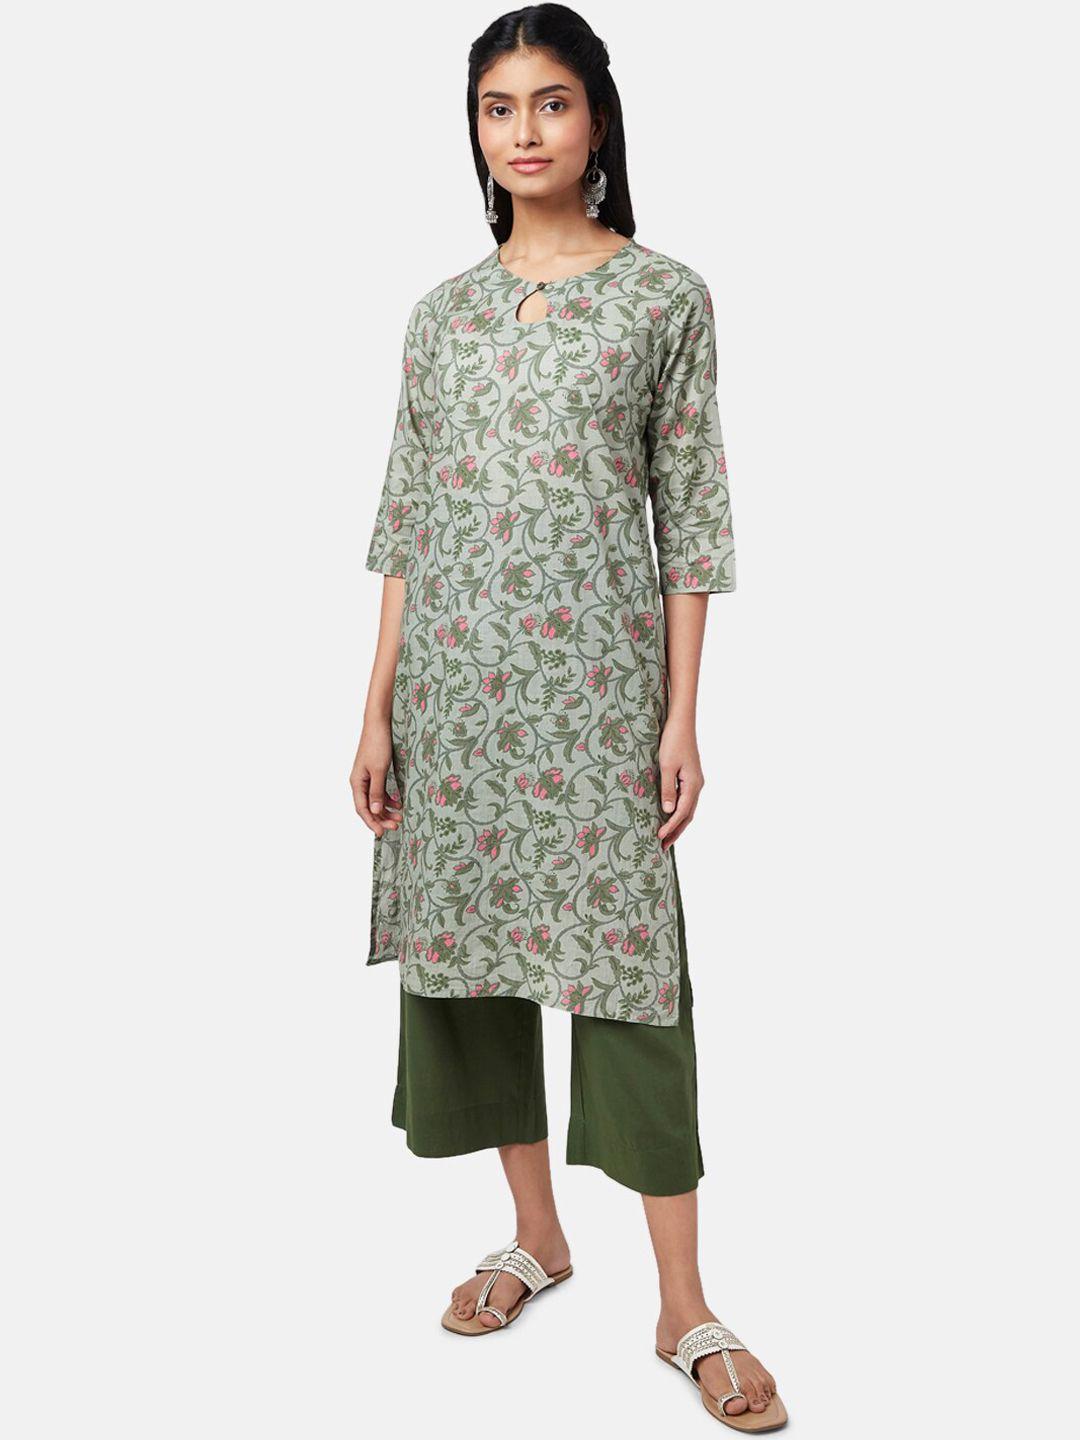 rangmanch by pantaloons floral printed keyhole neck pure cotton kurta with palazzos